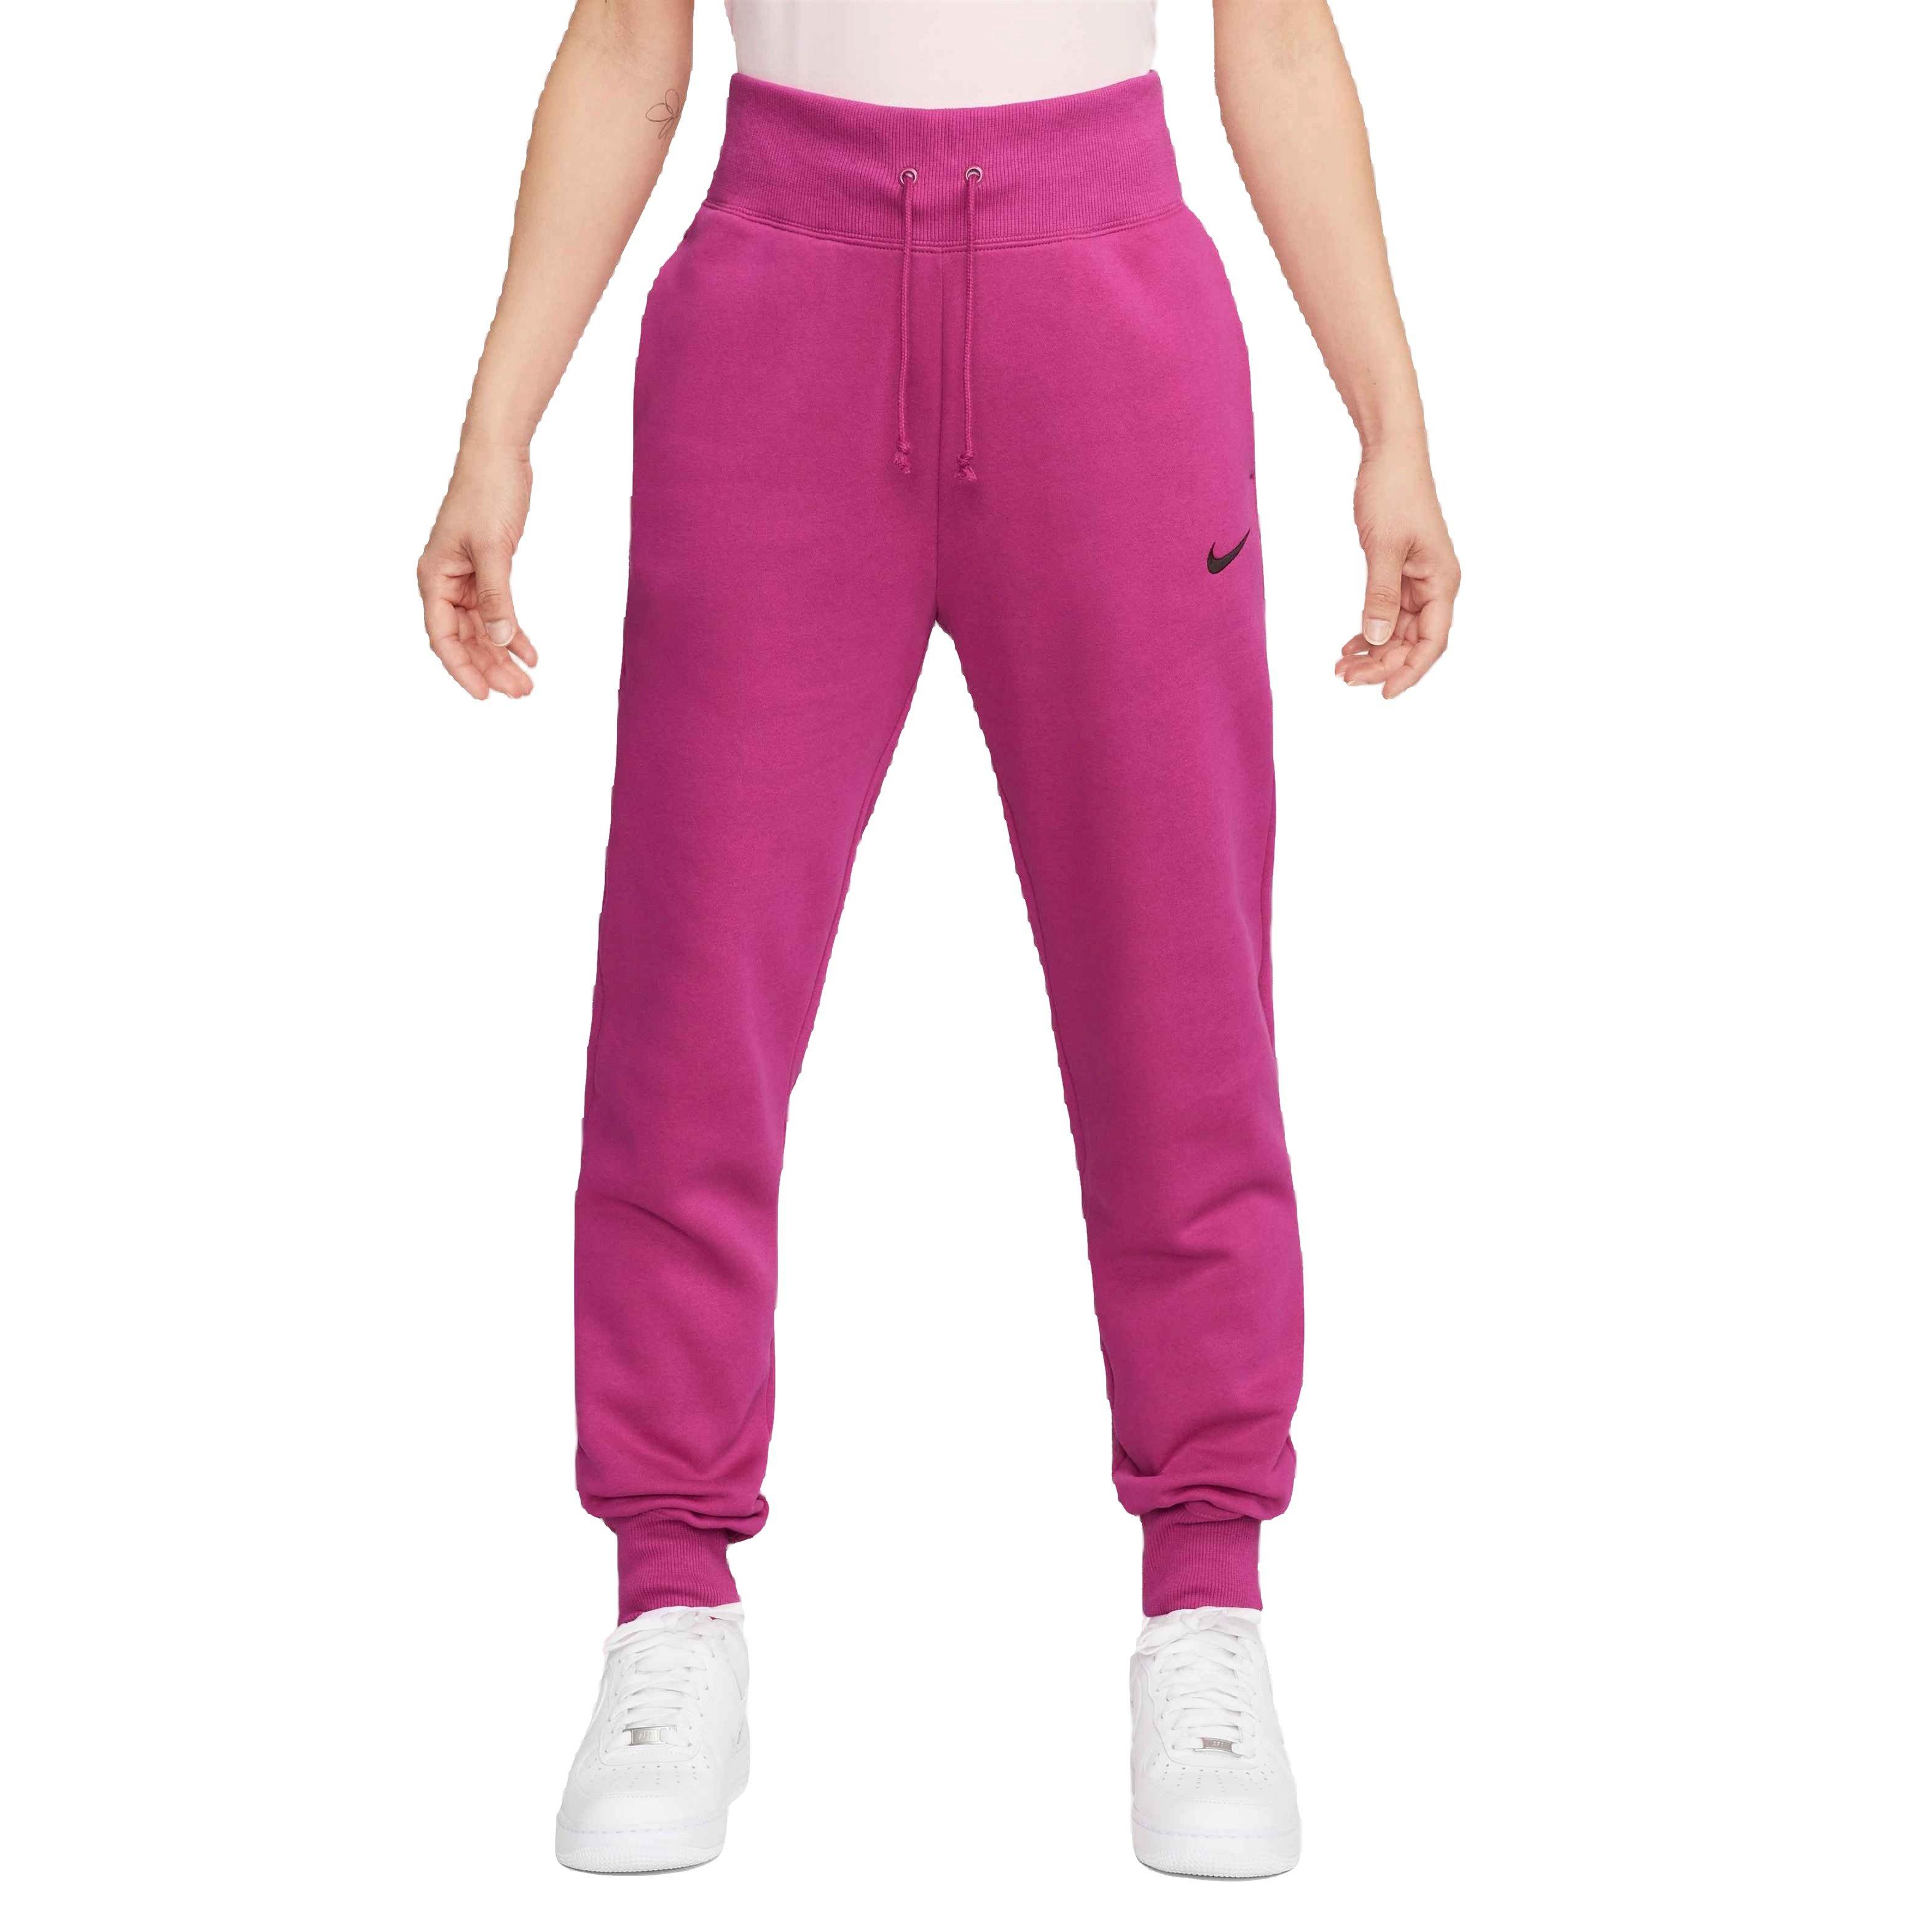  Pink Nike Sweatpants